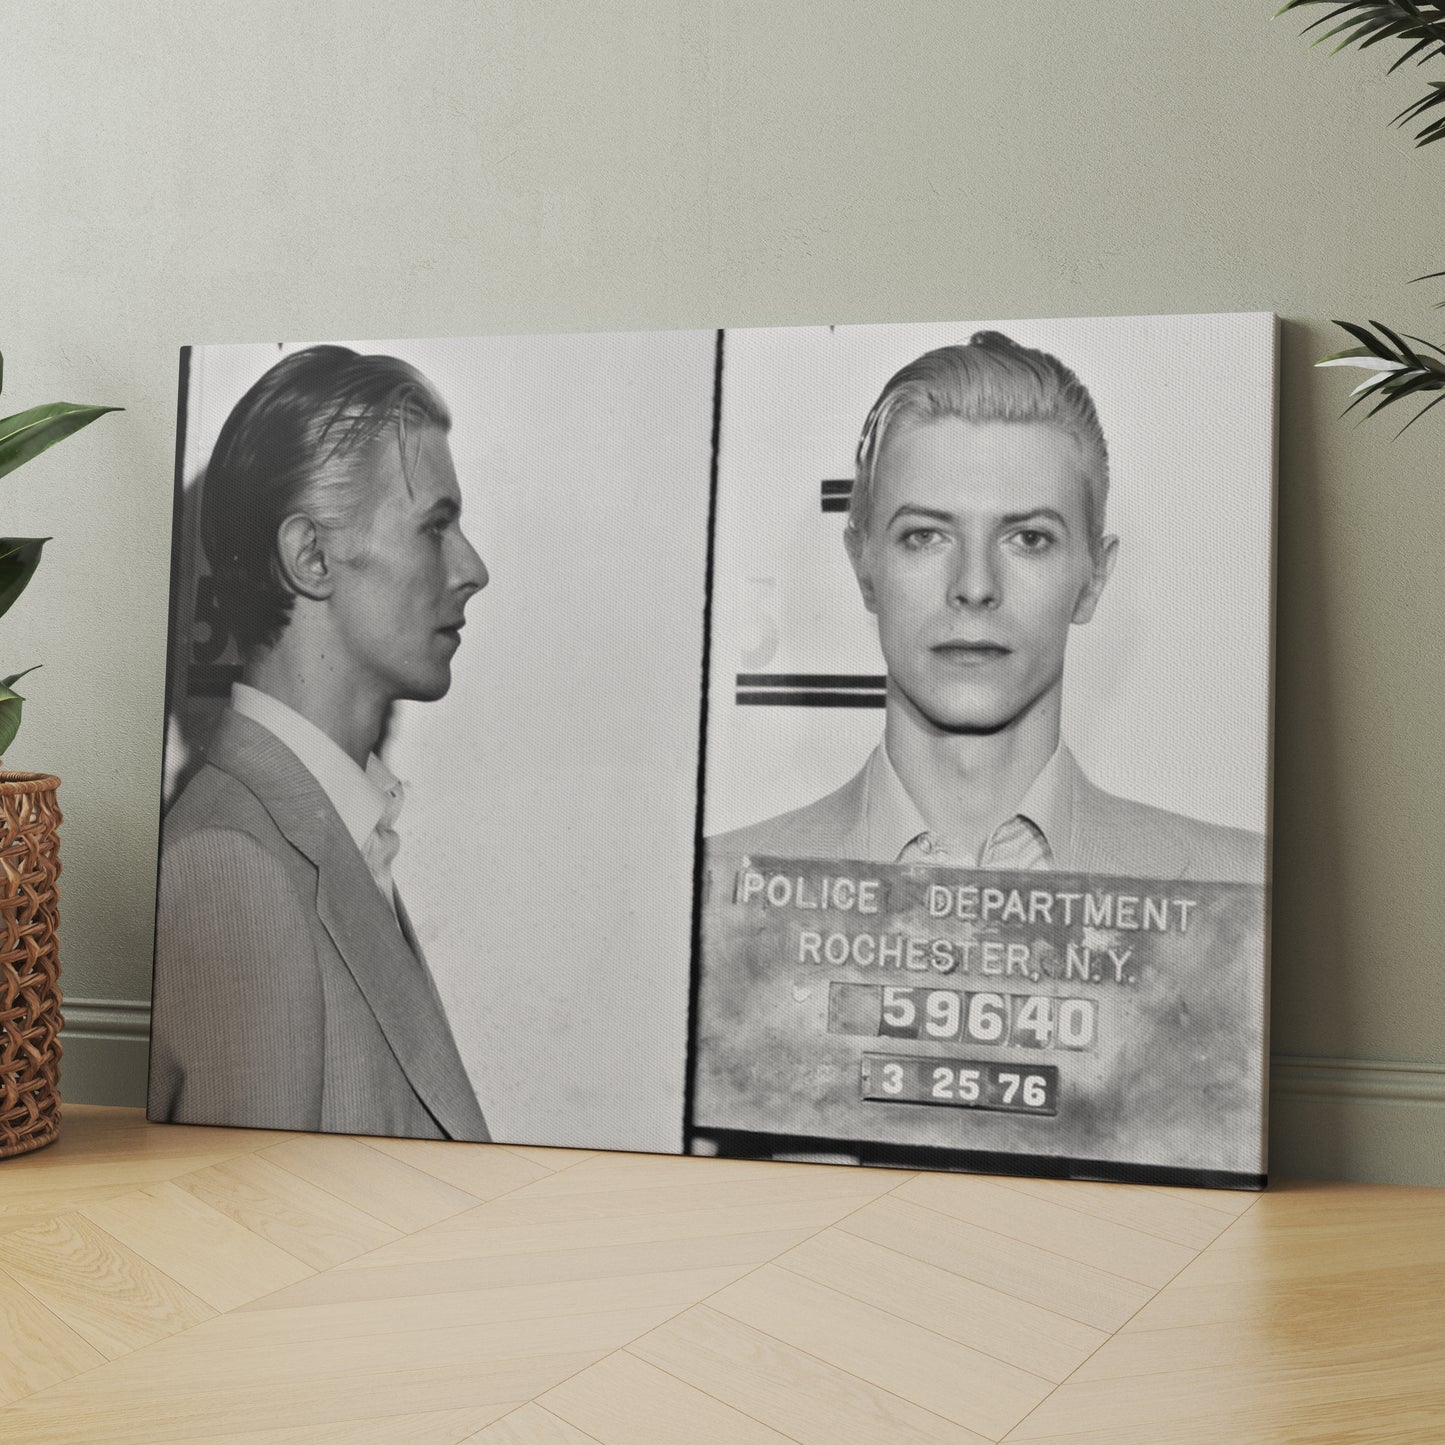 David Bowie Prison Mug Shots